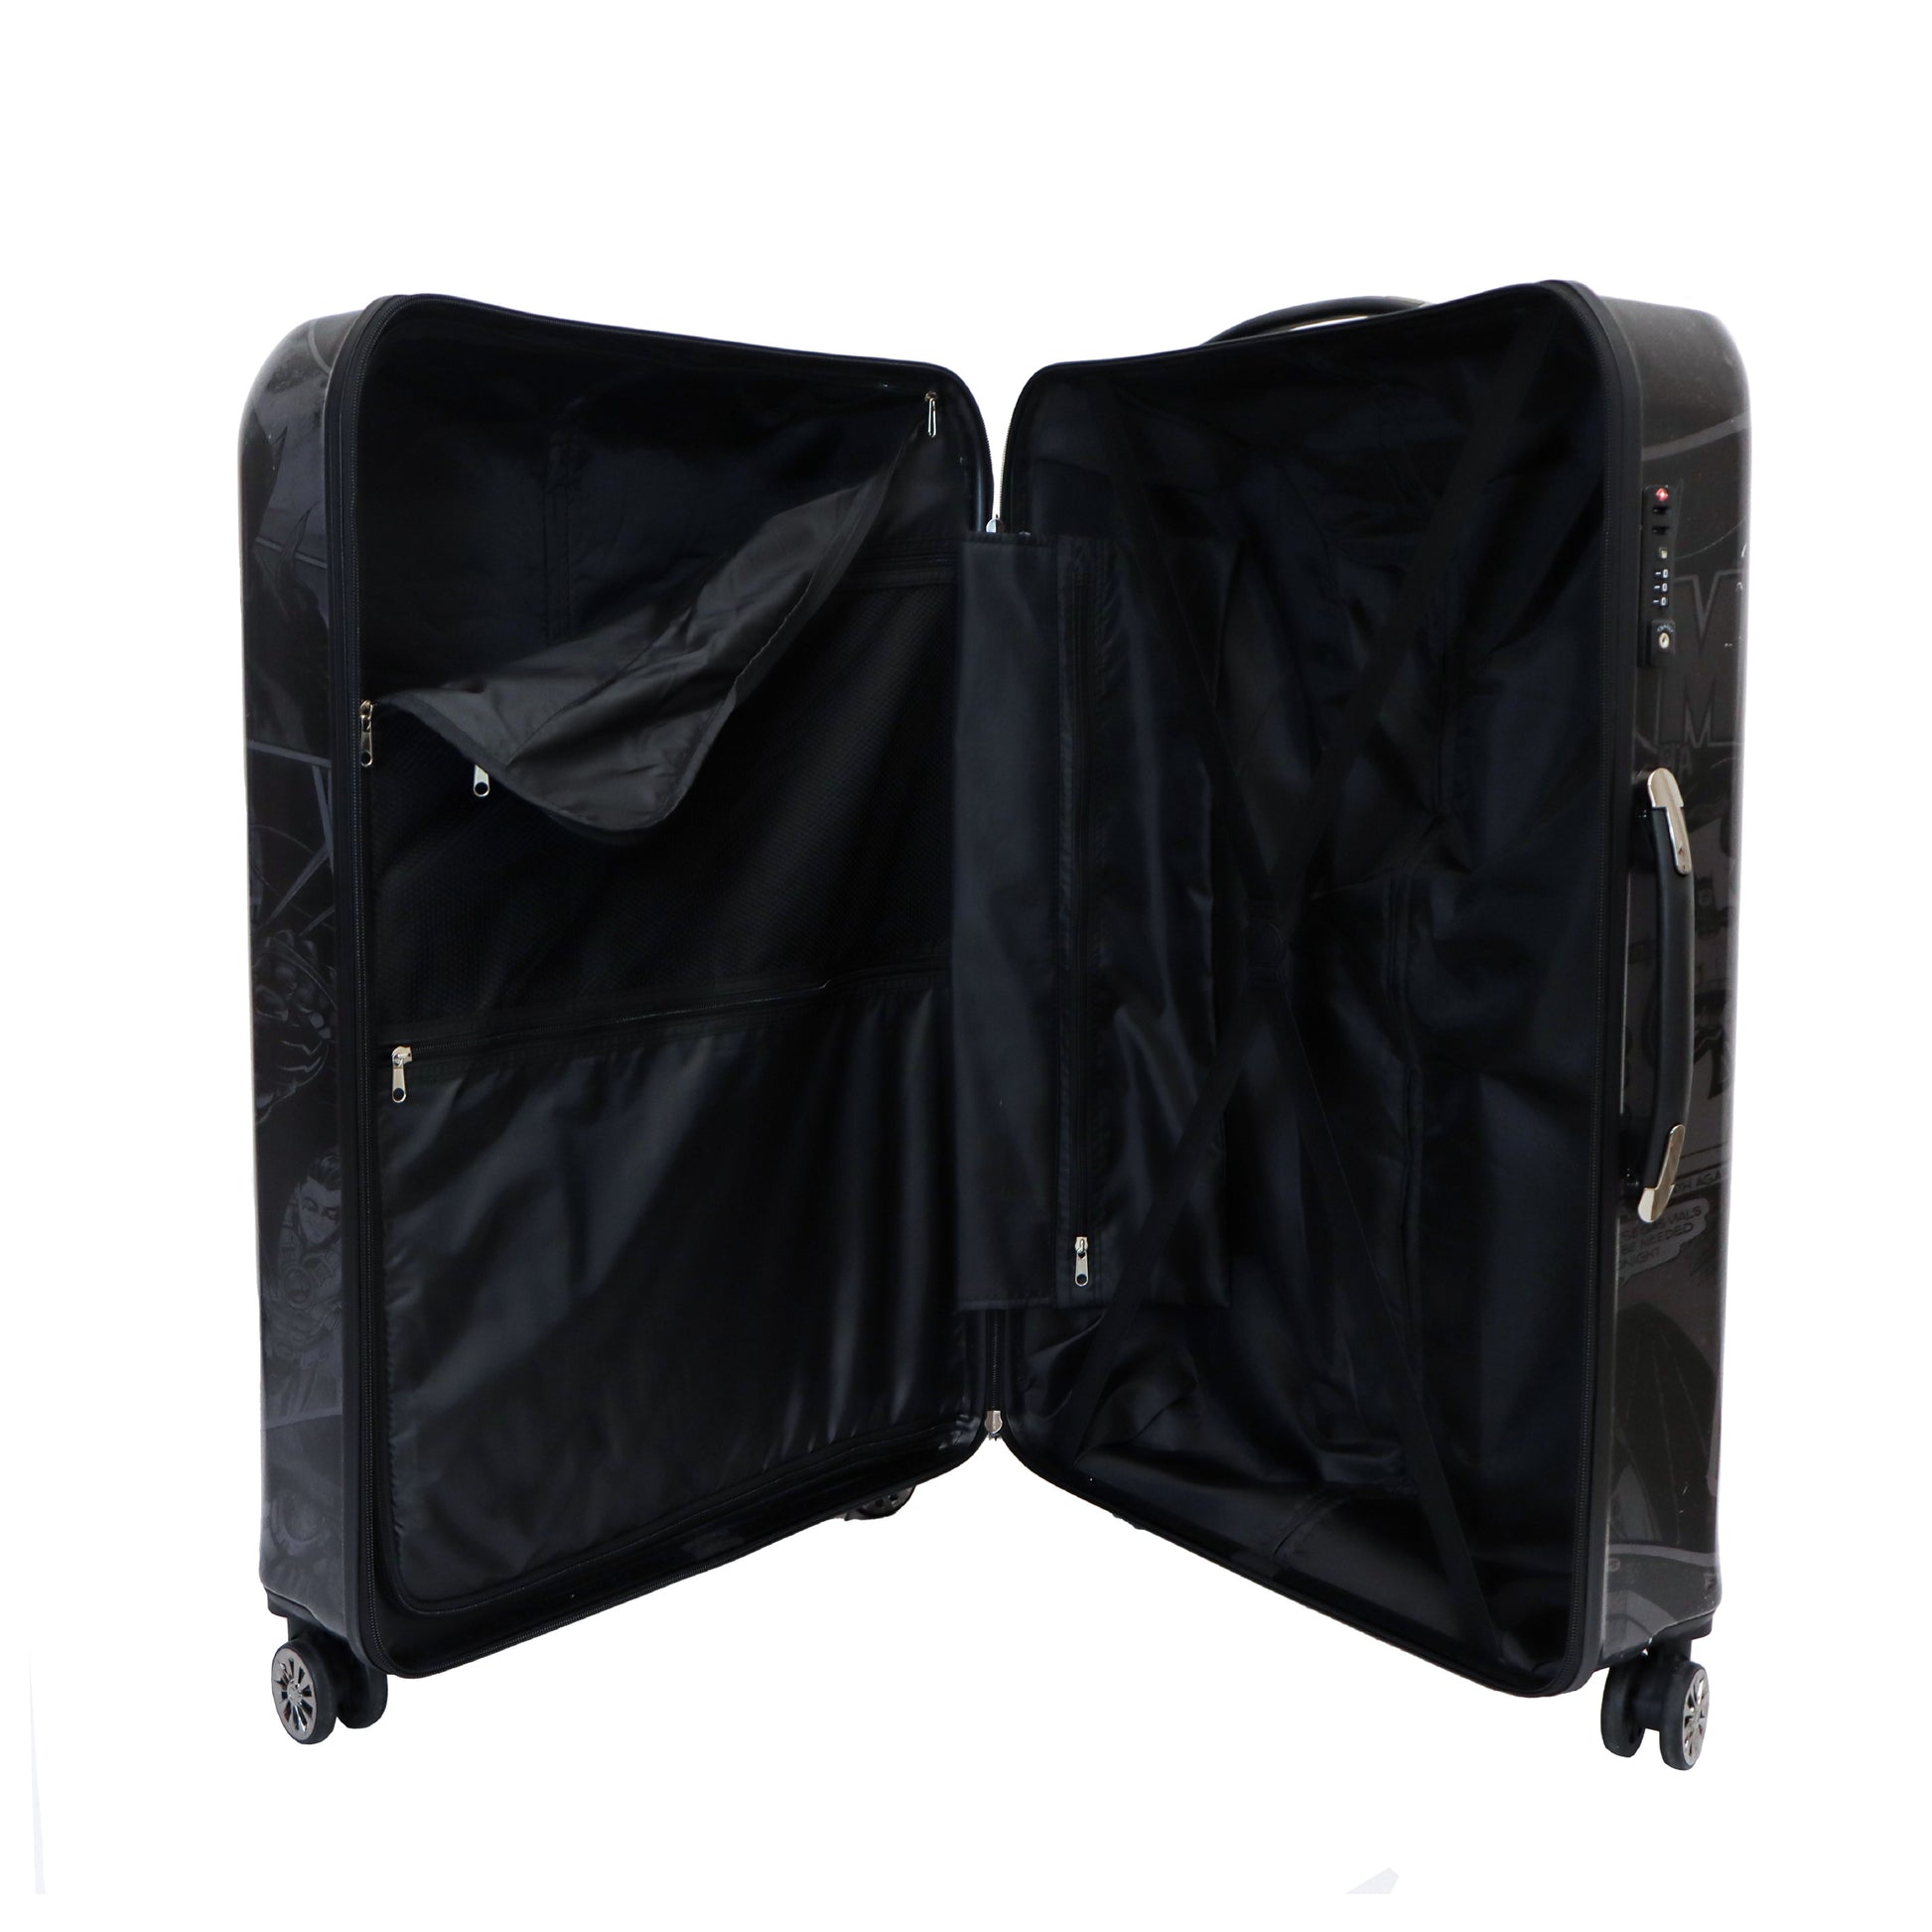 Cosmo Batman Comic 8W-26" Hard Luggage Trolley Case